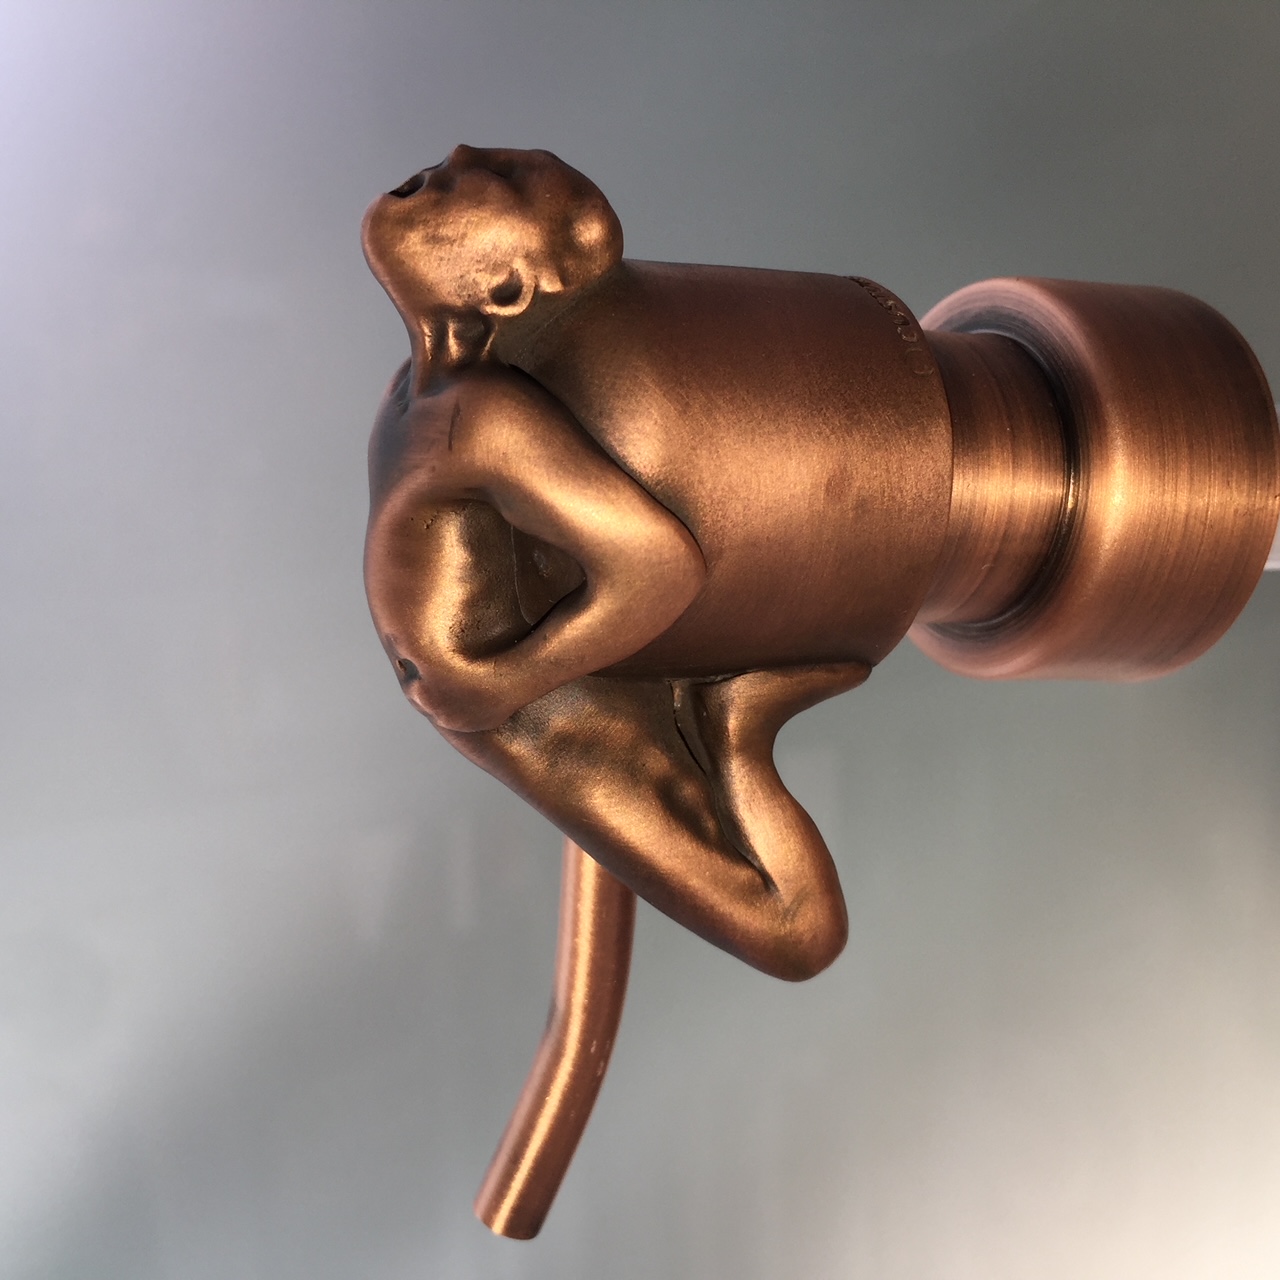 Orgasmic Man Sculptural Lotion Pump